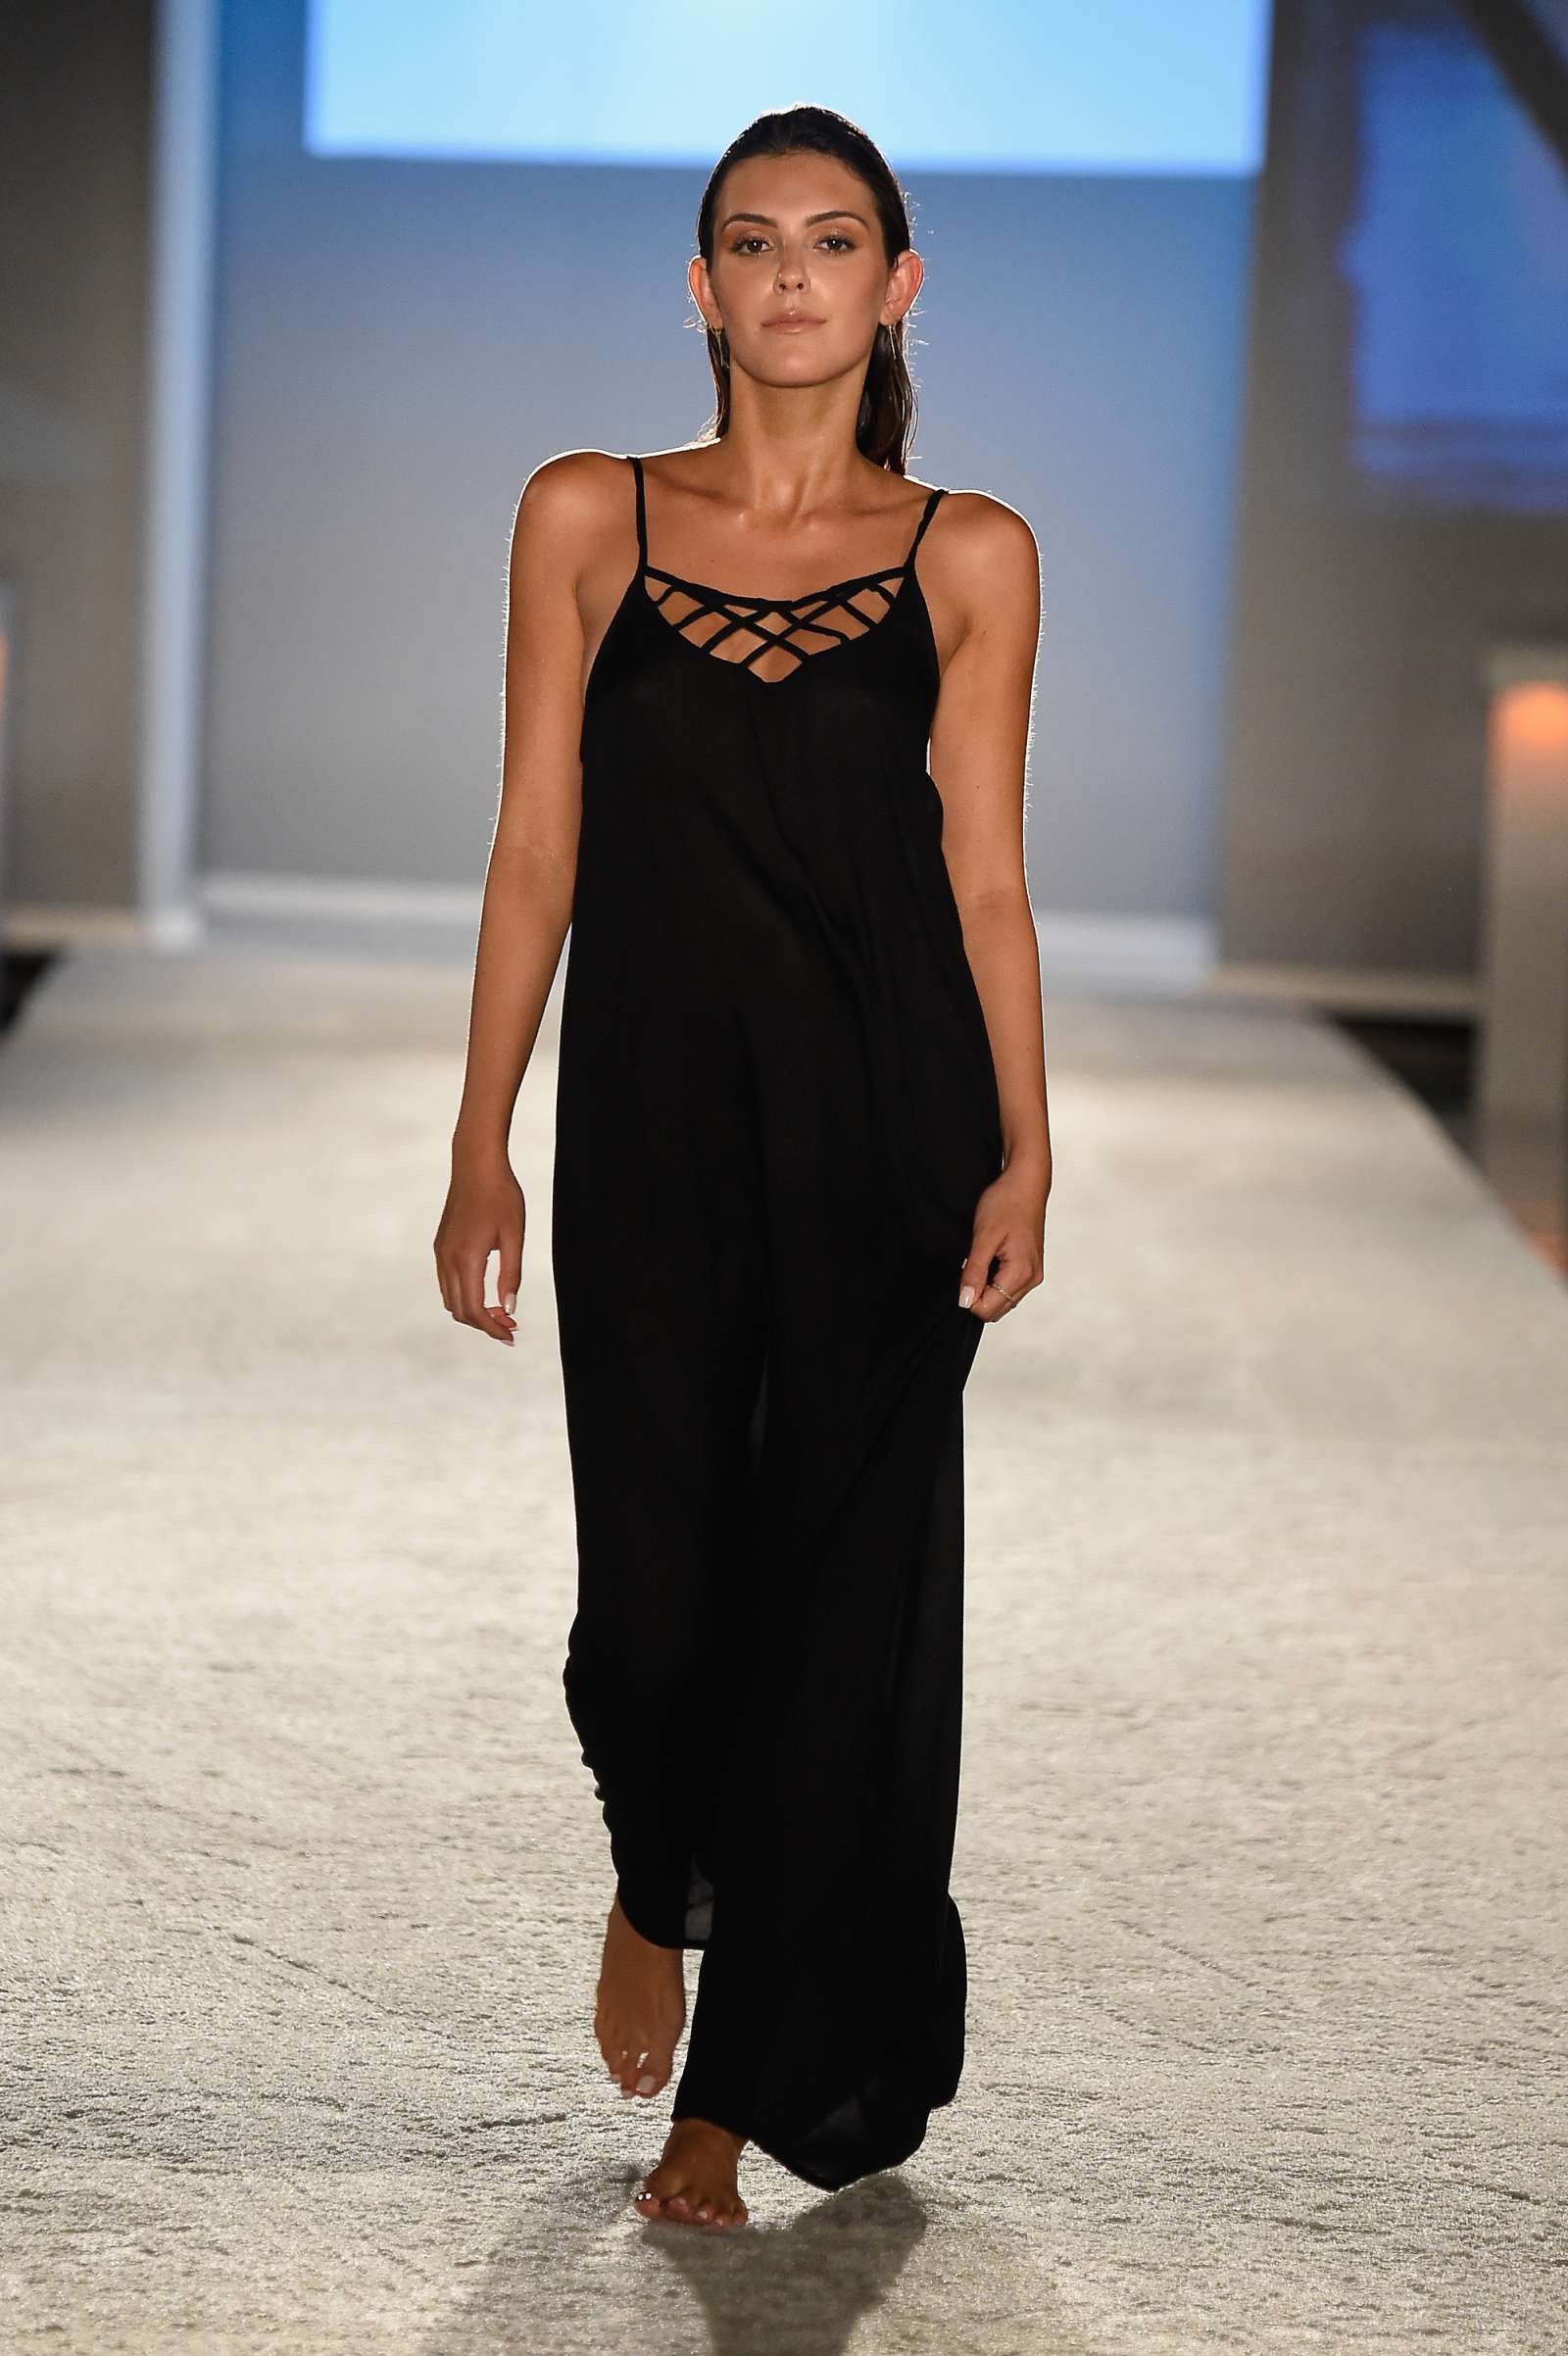 Julia Friedman â€“ Issa deâ€™ Mar 2017 Collection Fashion Show in Miami